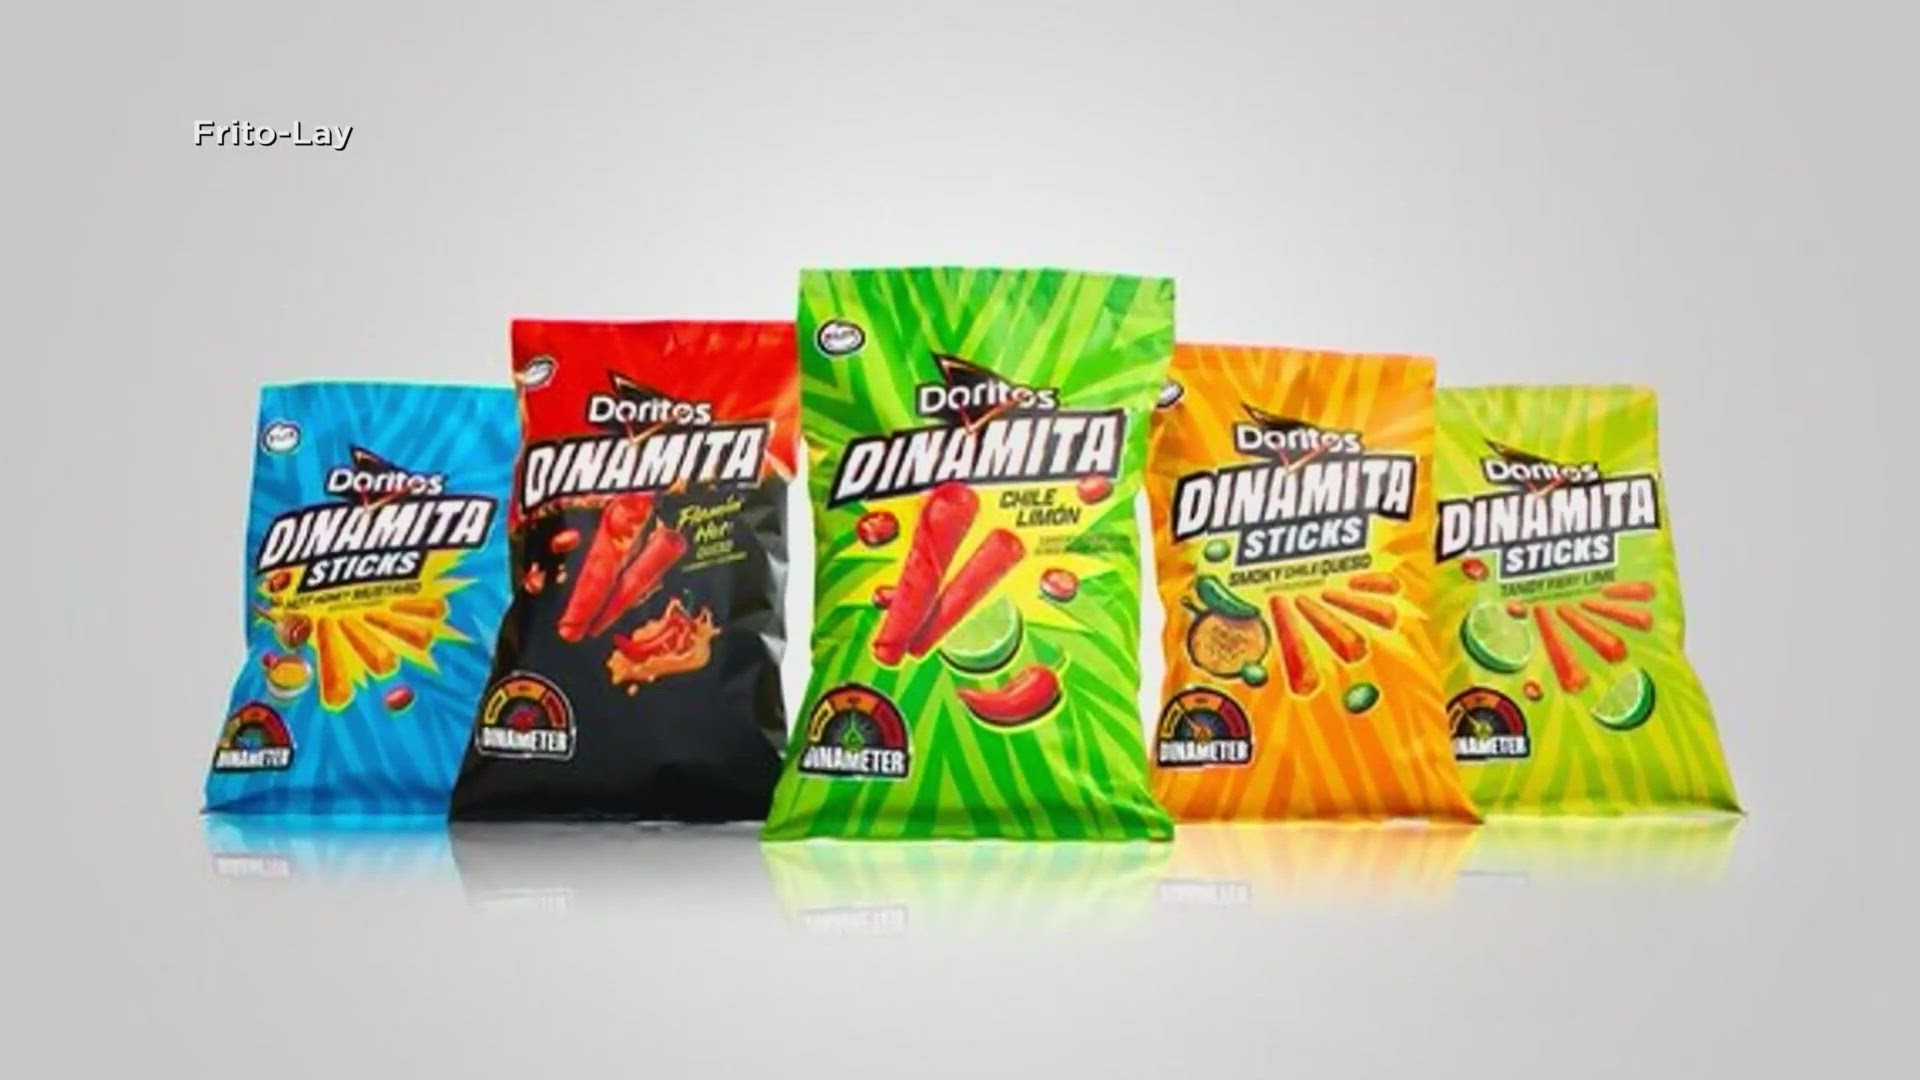 New Doritos flavors ahead of the big game